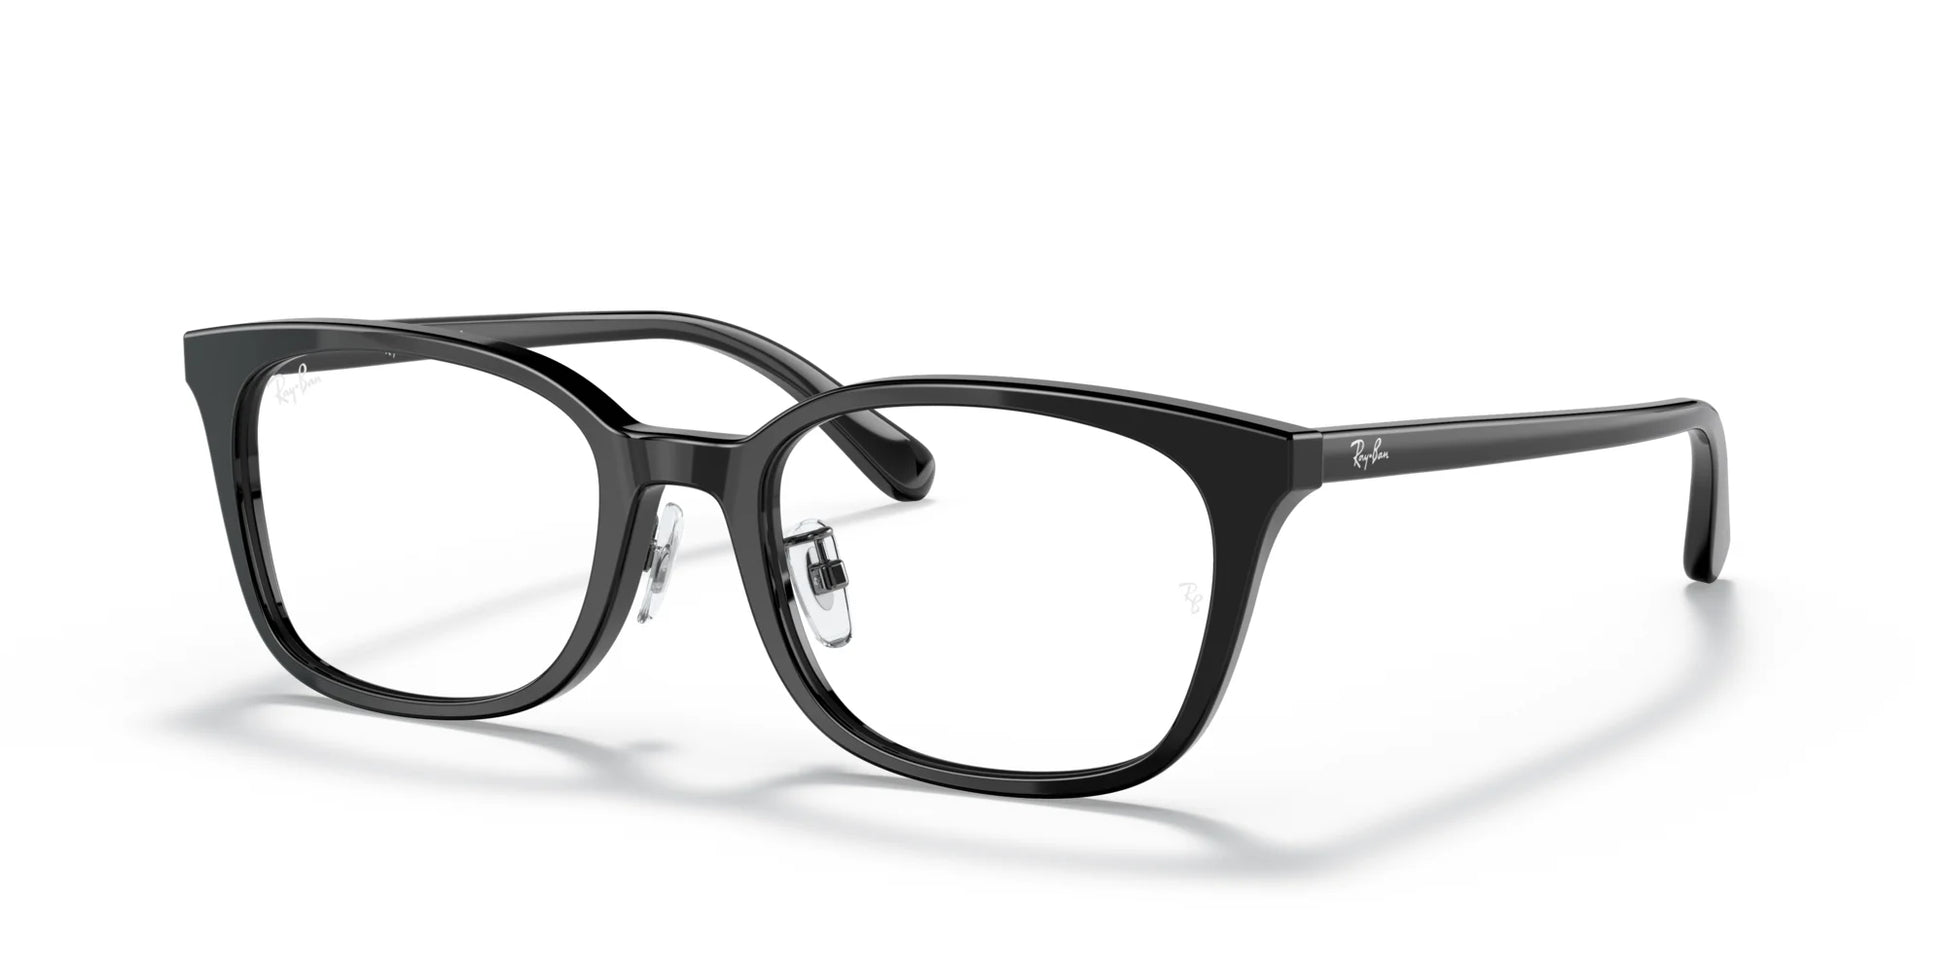 Ray-Ban RX5407D Eyeglasses Black